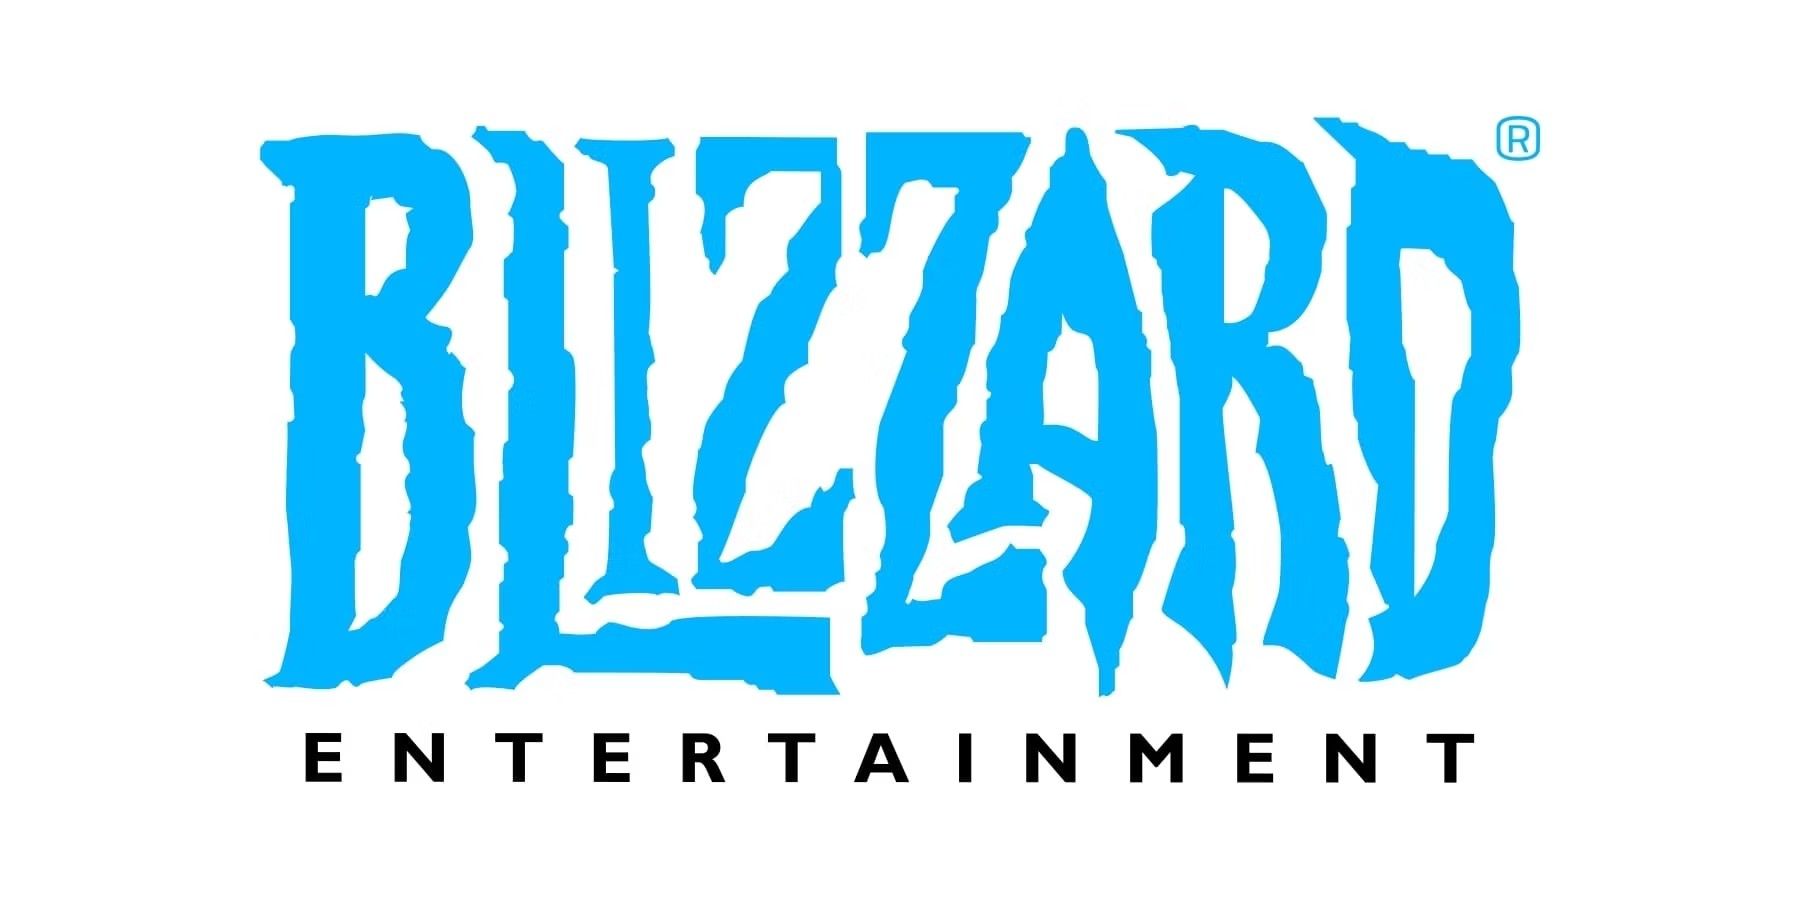 blizzard-logo-starcraft-revival